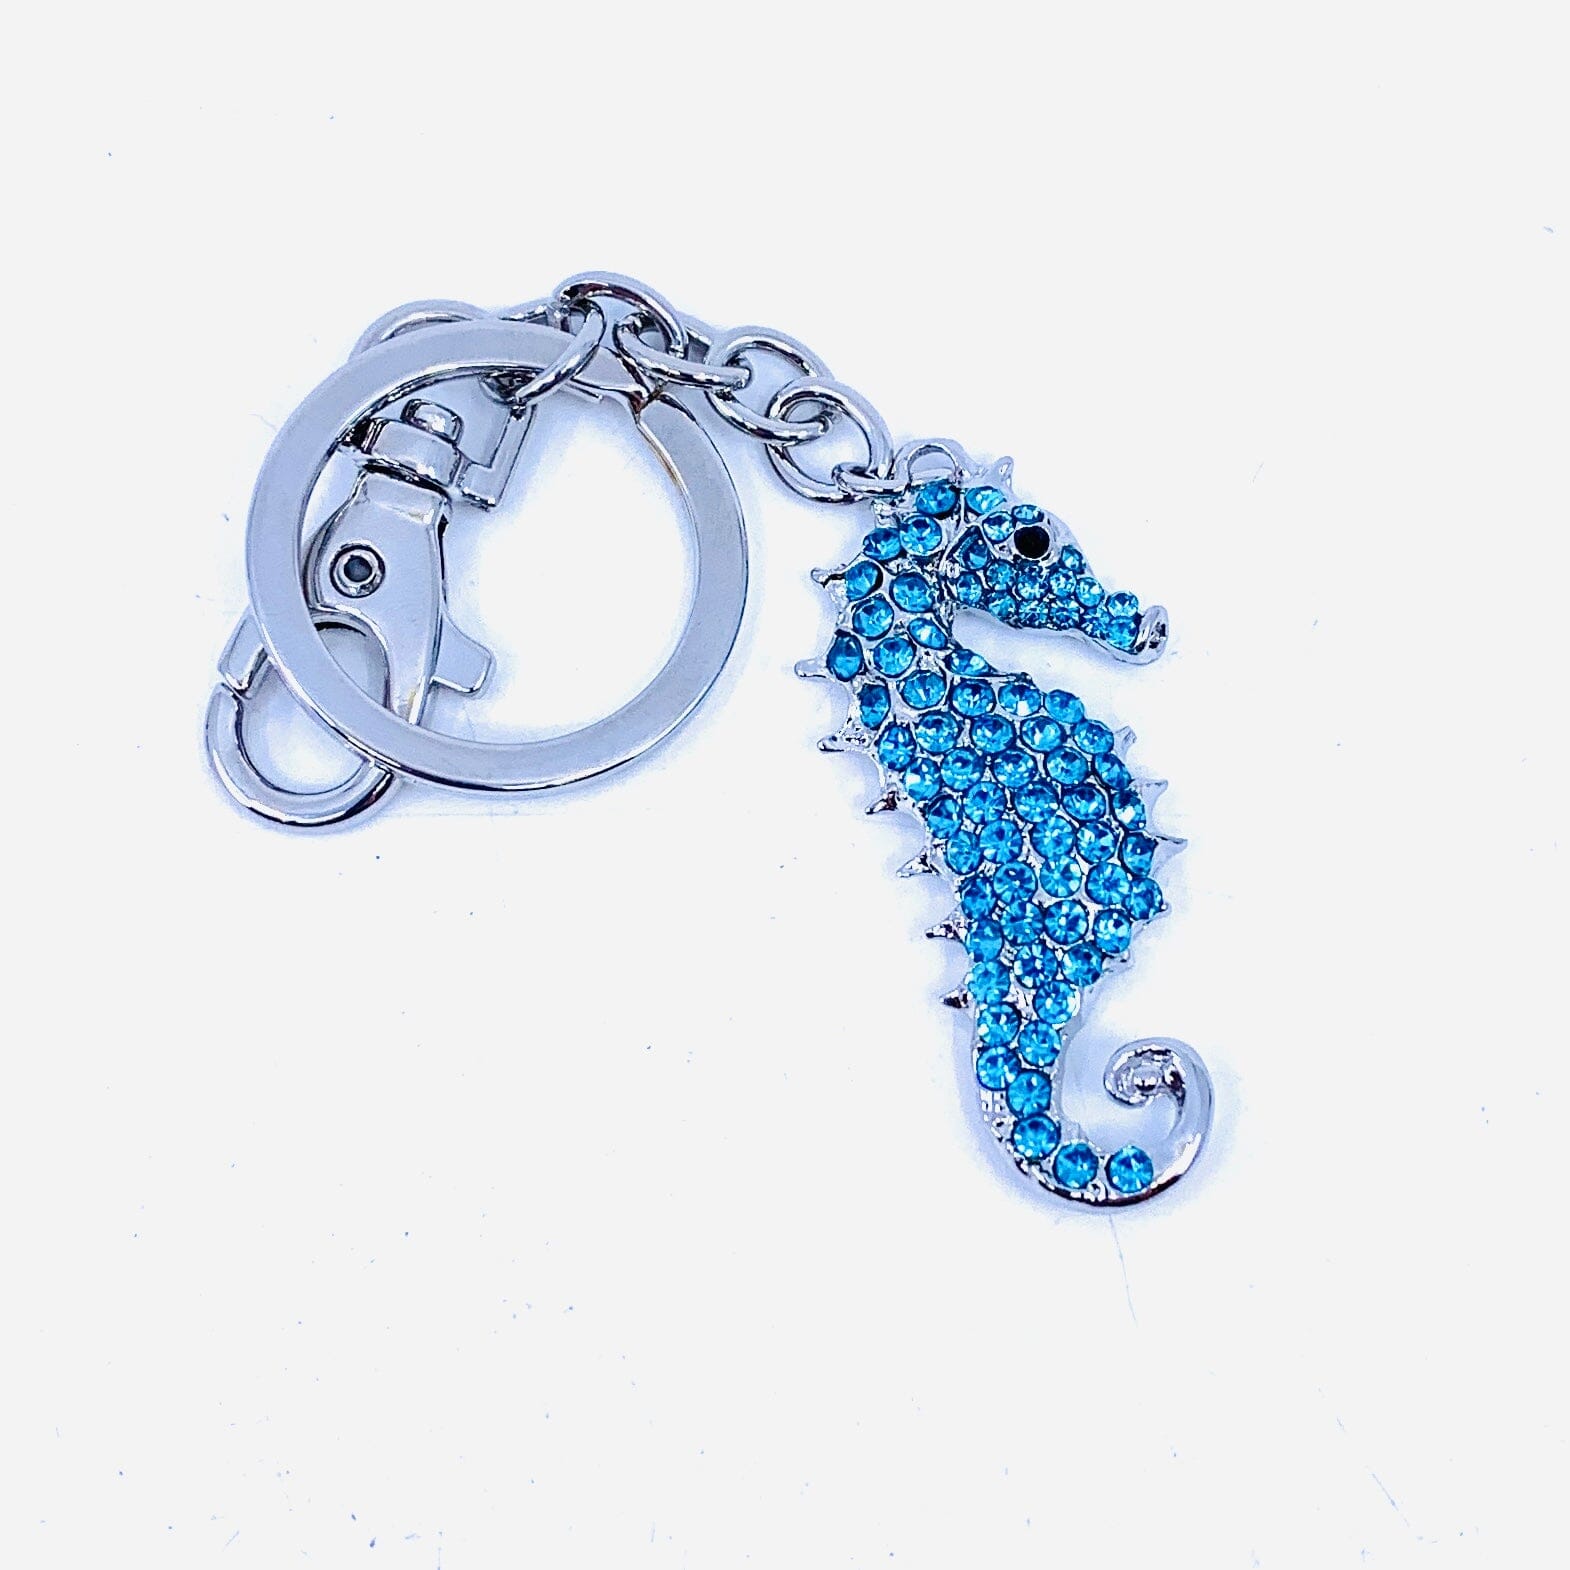 Bejeweled Key Chain 6, Seahorse Accessory Kubla Craft 